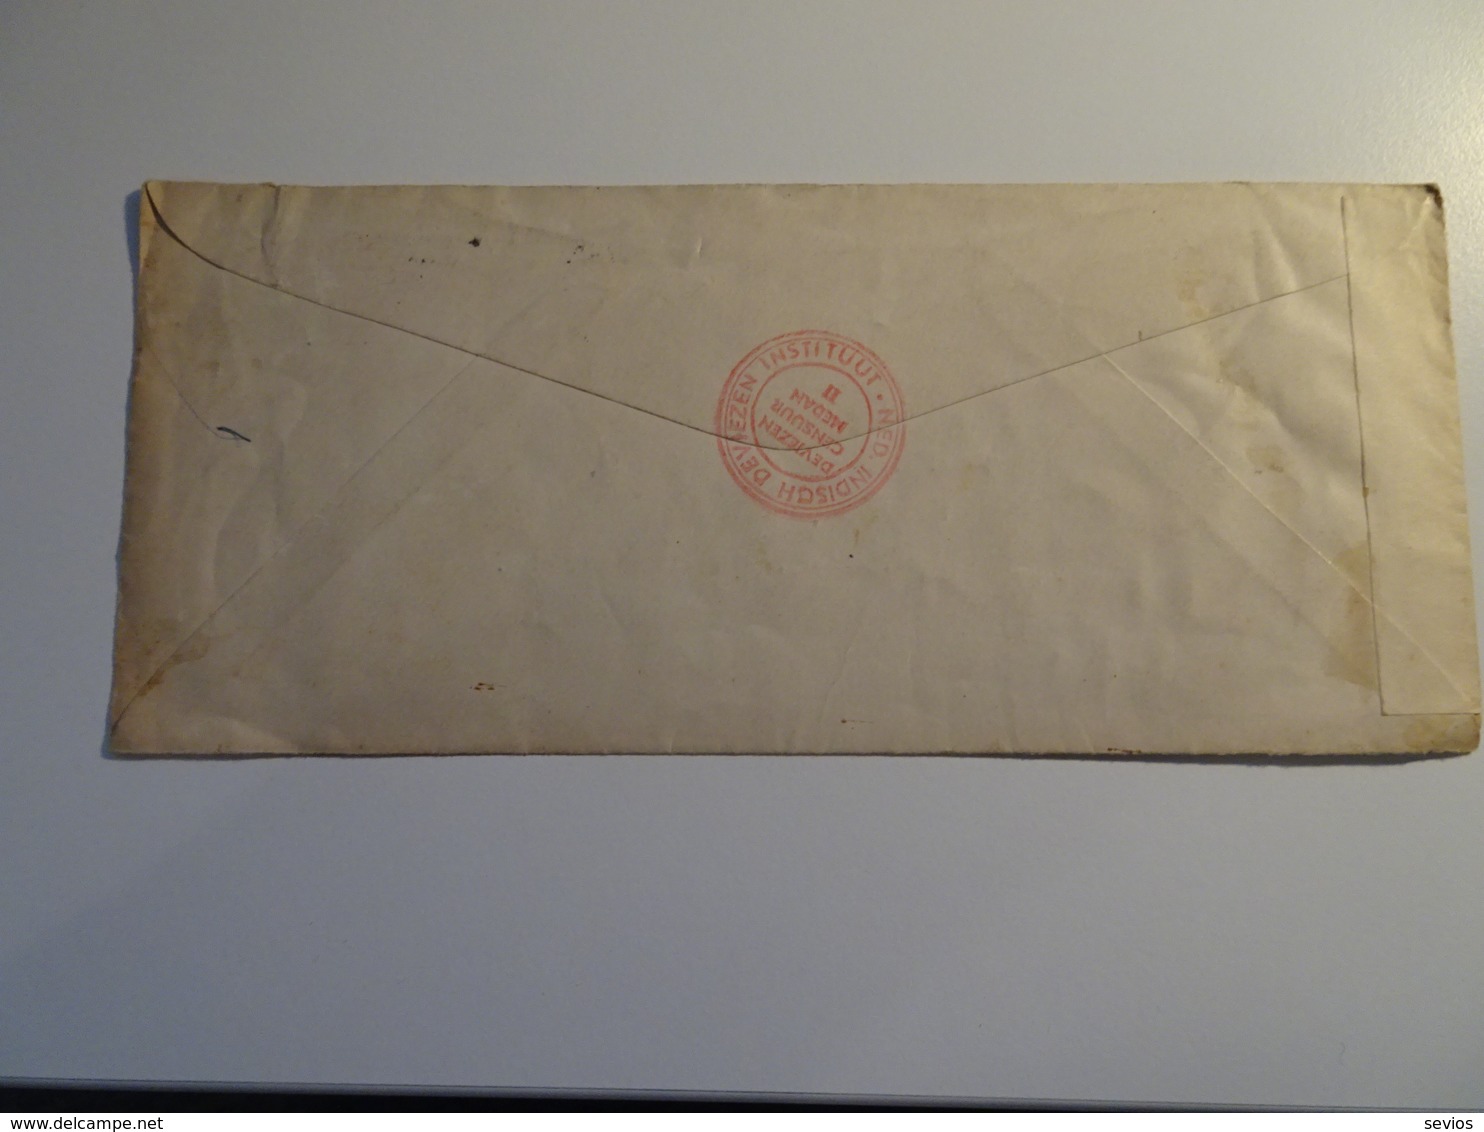 Sevios / USA / **, *, (*) Or Used - Postal History